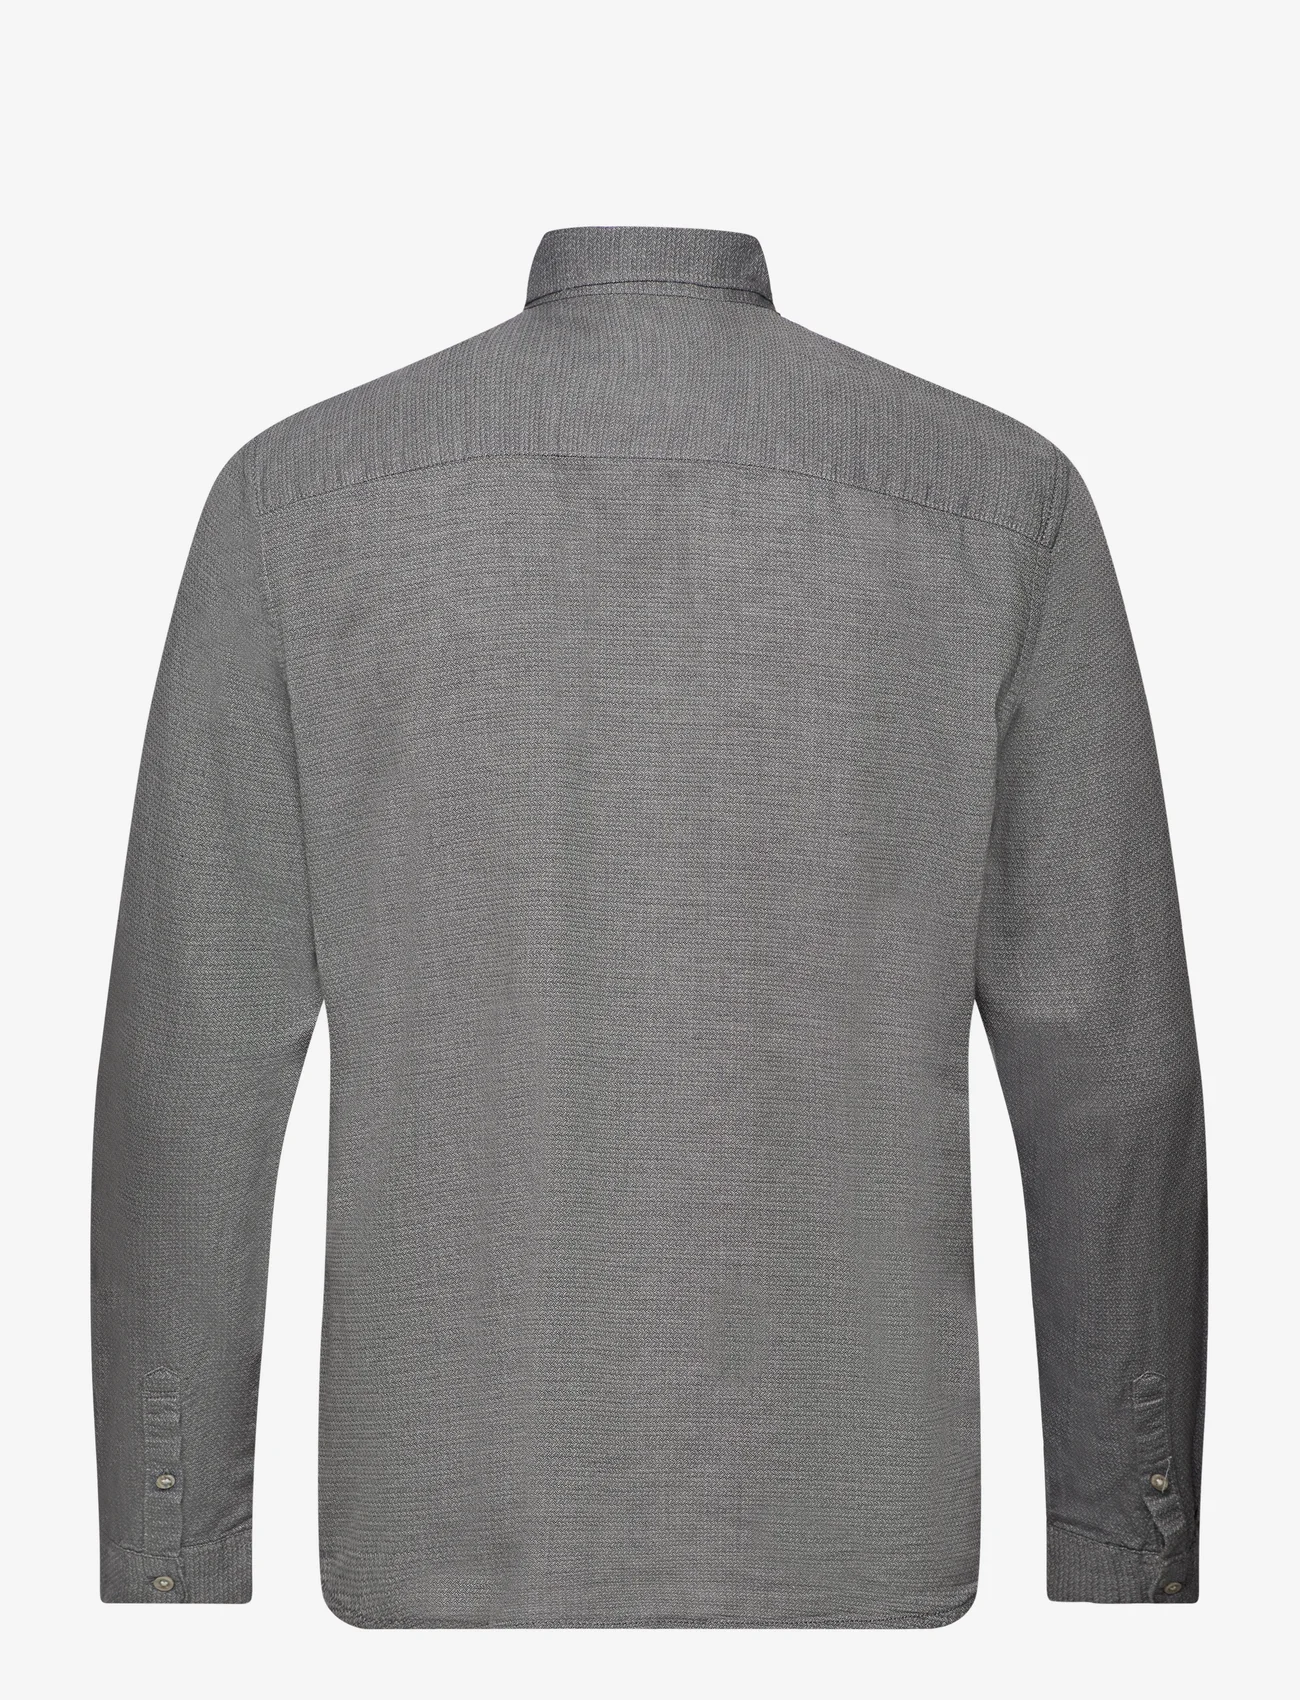 Tom Tailor - structured shirt - peruskauluspaidat - navy off white structure - 1